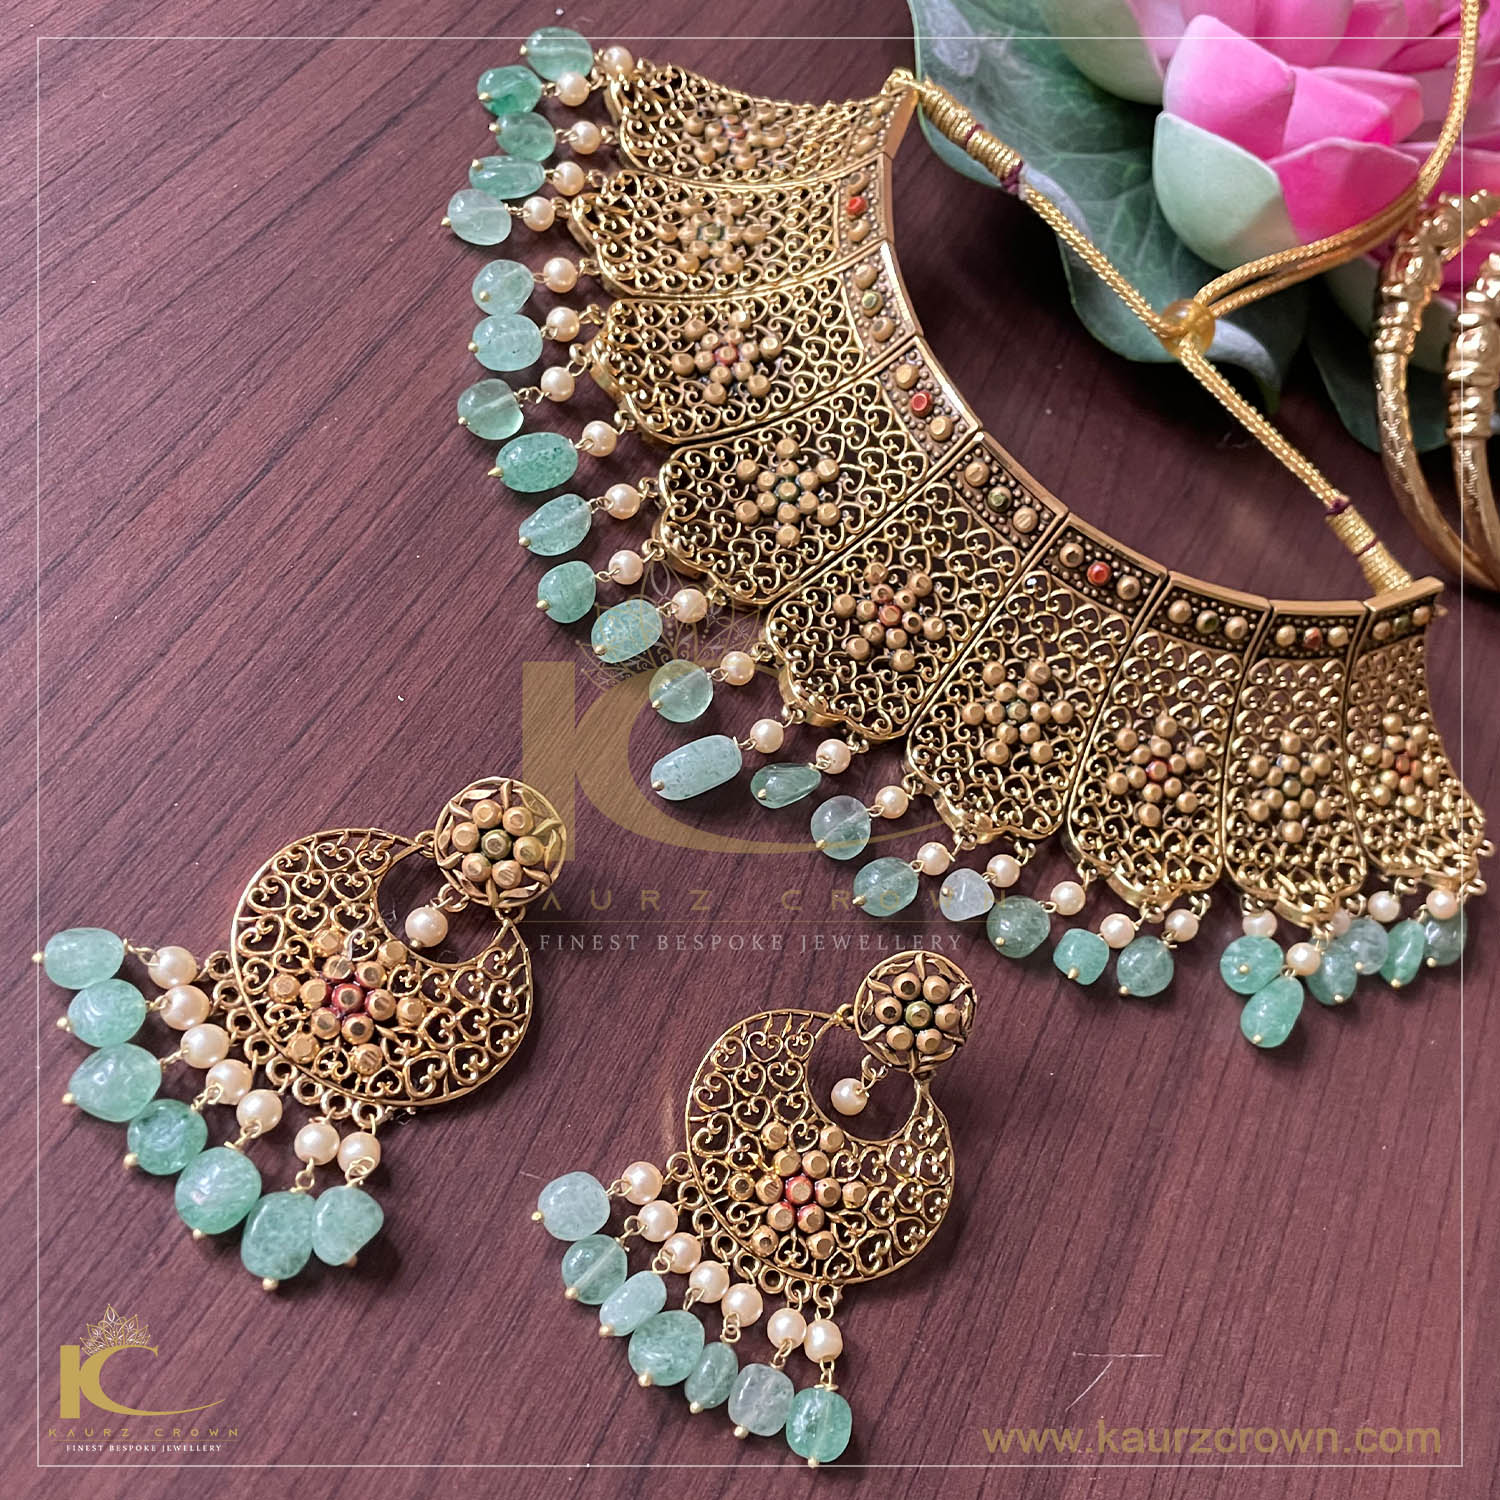 Sonpari Necklace Set , kaurz crown jewellery , online jewellery store , sonpari earrings , online store , gold plated jewellery